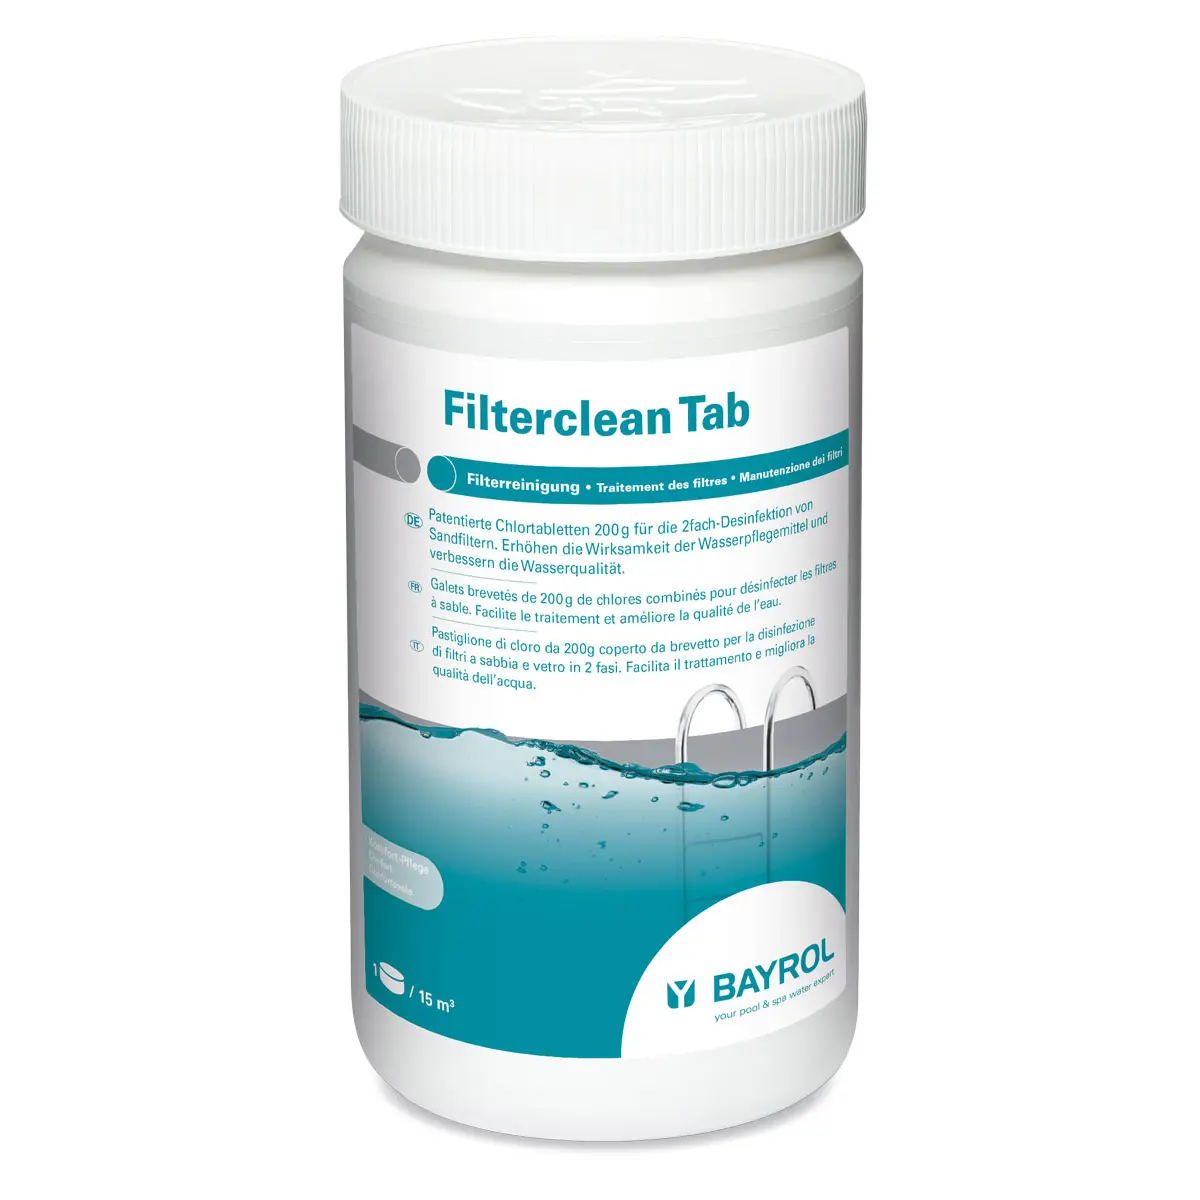 Bayrol Filterclean Tab, 1 kg